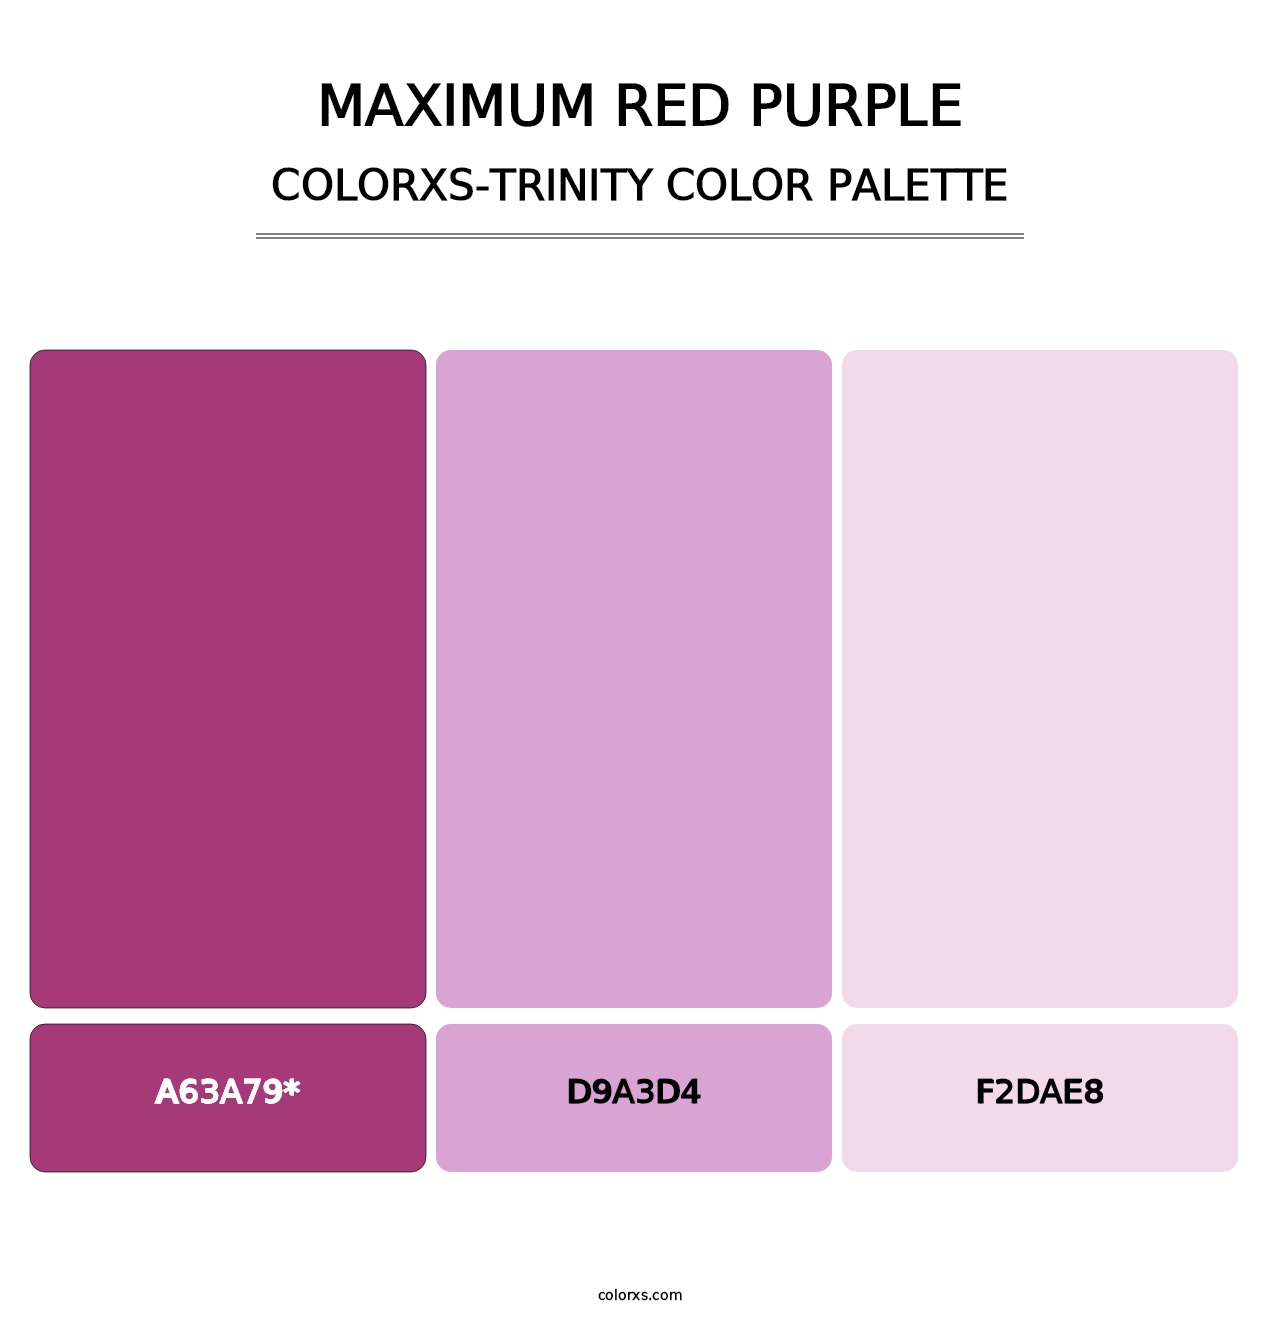 Maximum Red Purple - Colorxs Trinity Palette